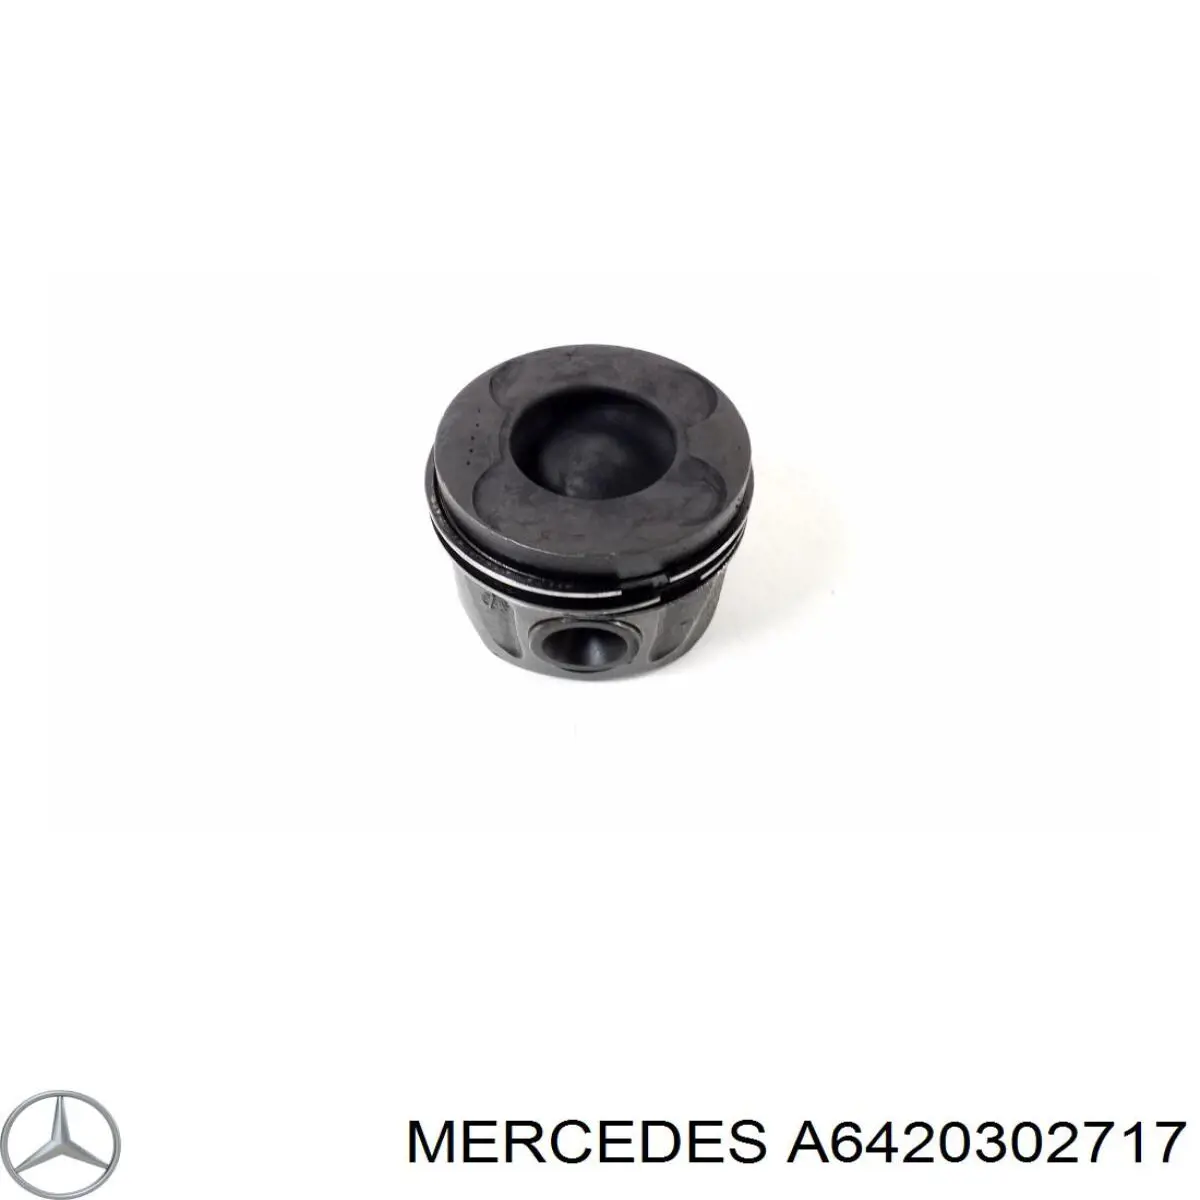 Поршень в комплекте на 1 цилиндр, STD Mercedes A6420302717